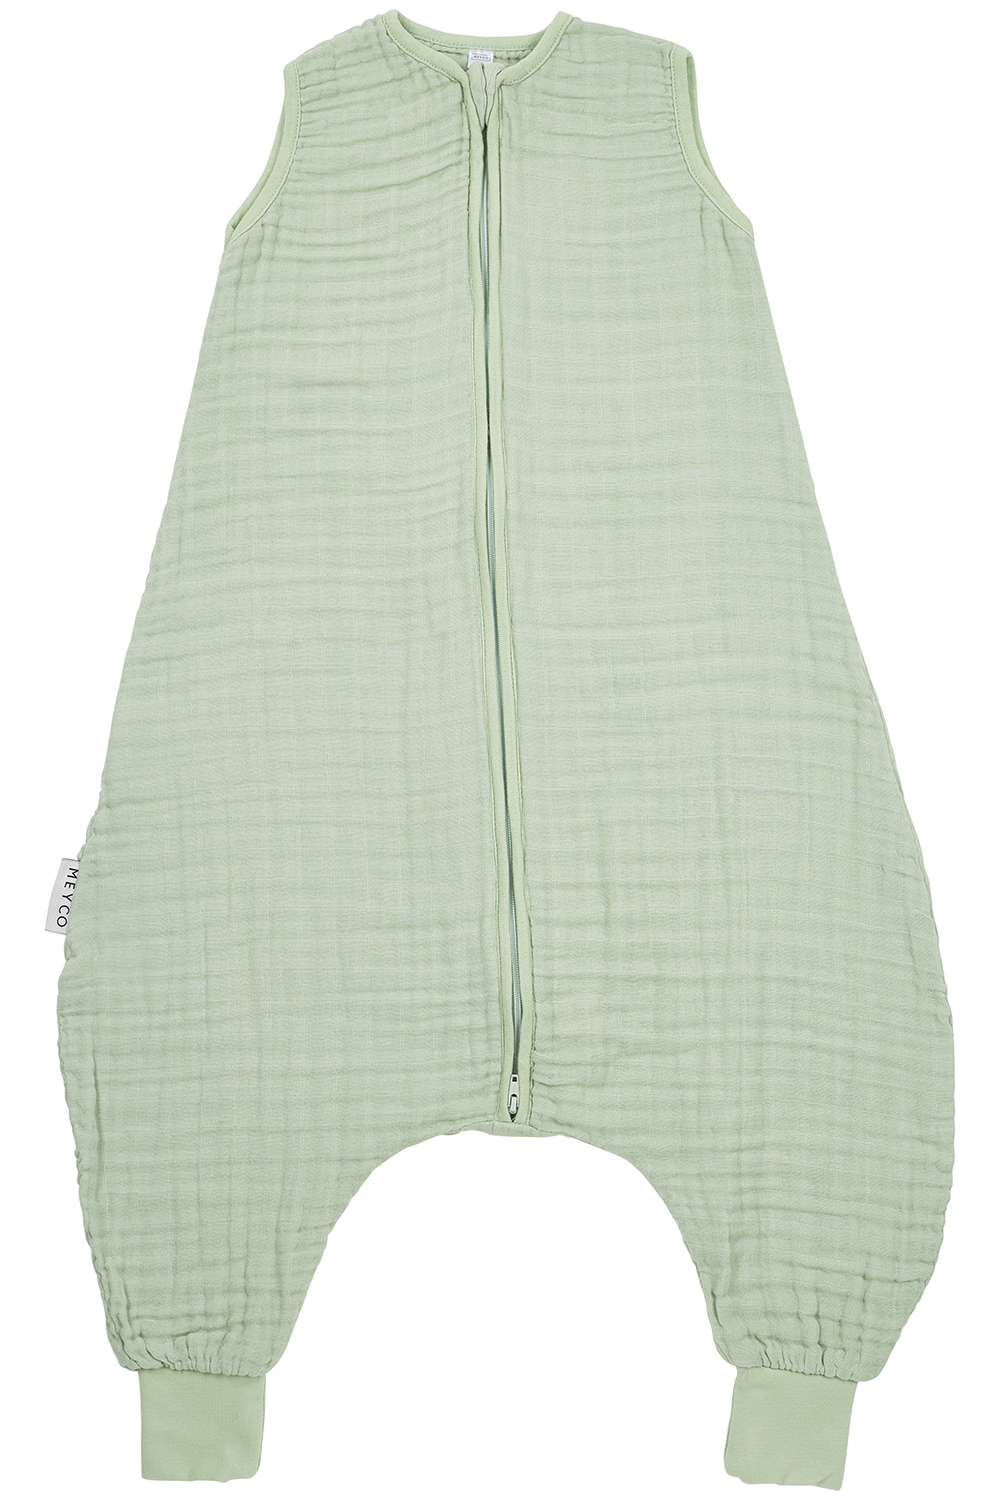 Baby zomer slaapoverall jumper pre-washed hydrofiel Uni - soft green - 92cm